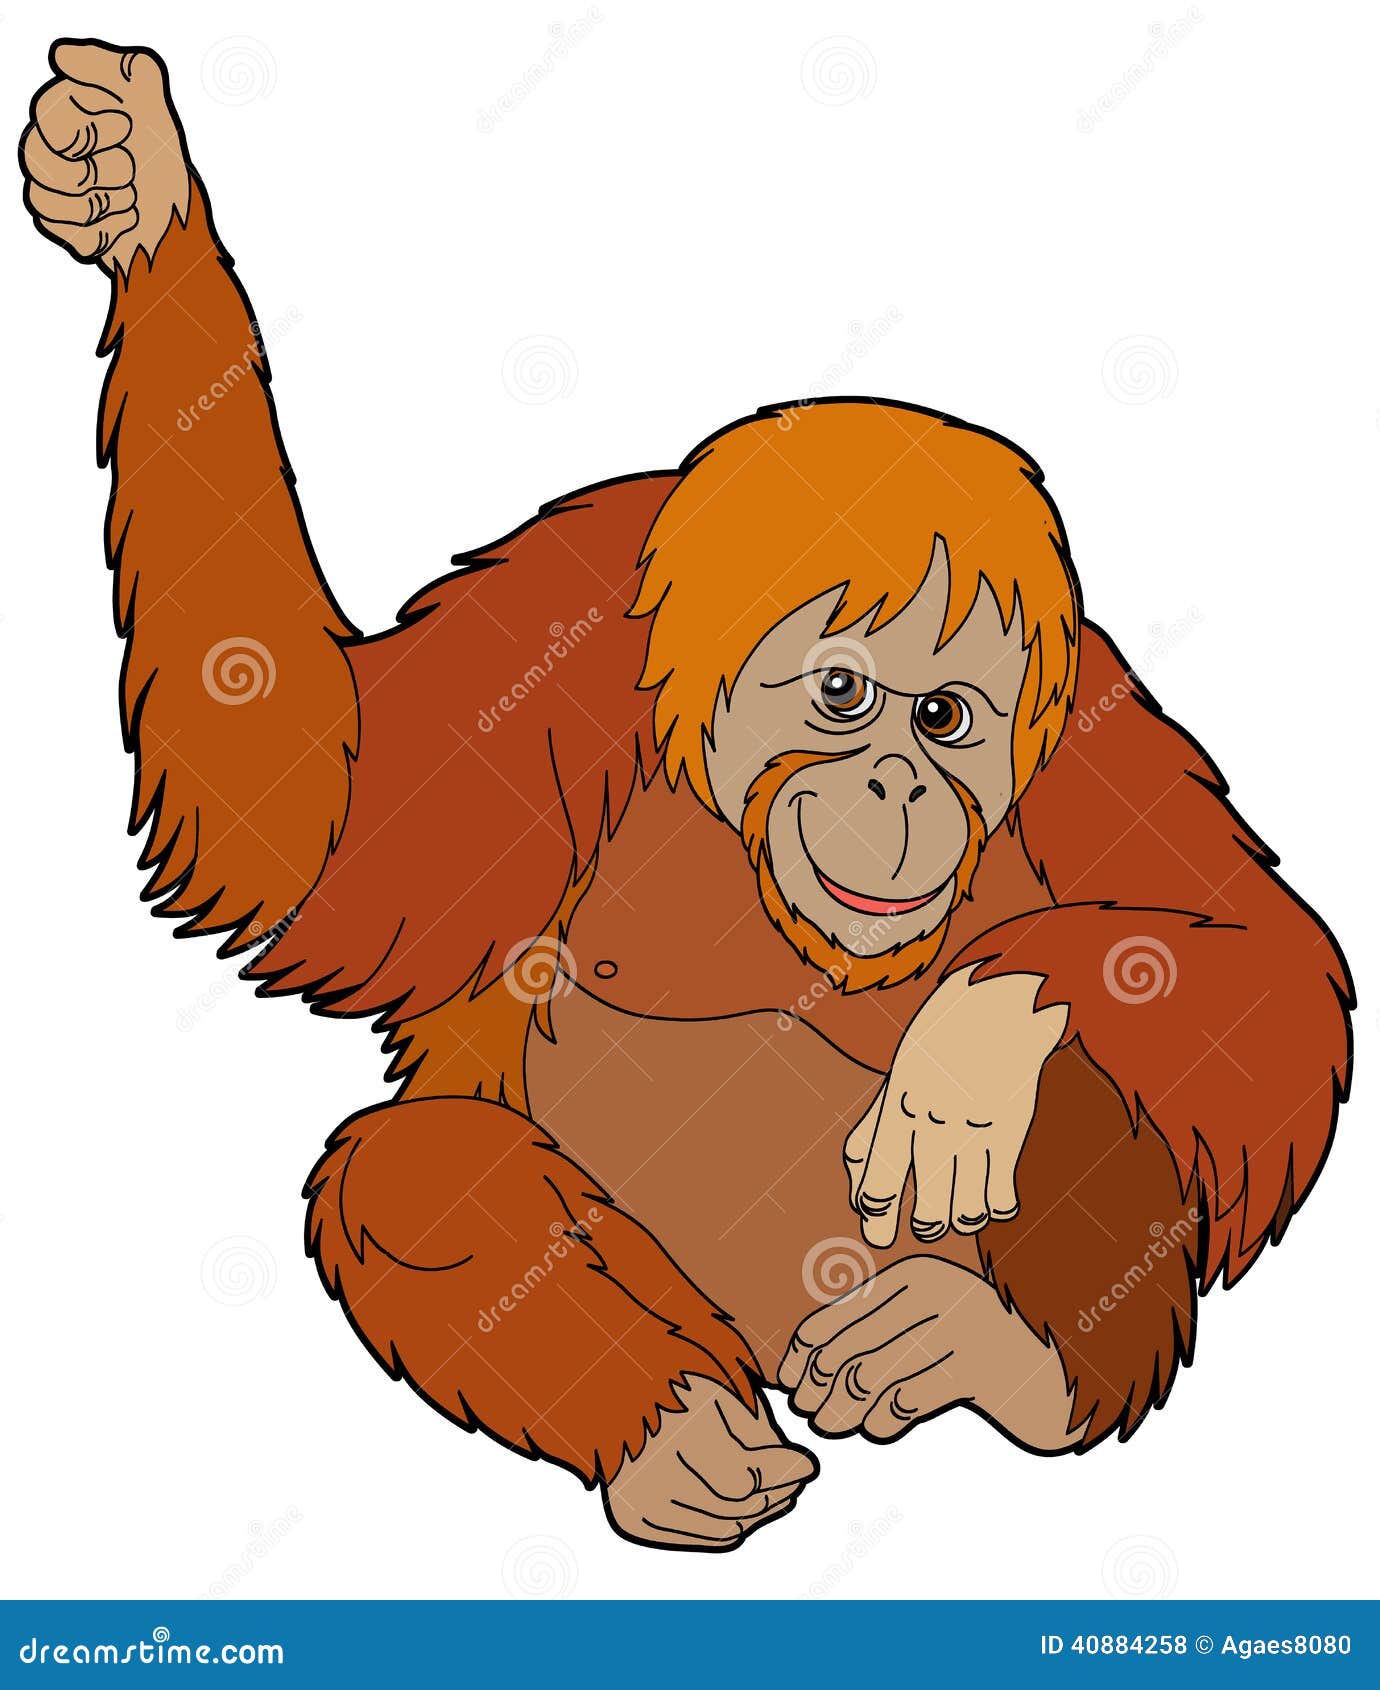  Cartoon  Animal Orangutan  Illustration For The Children 